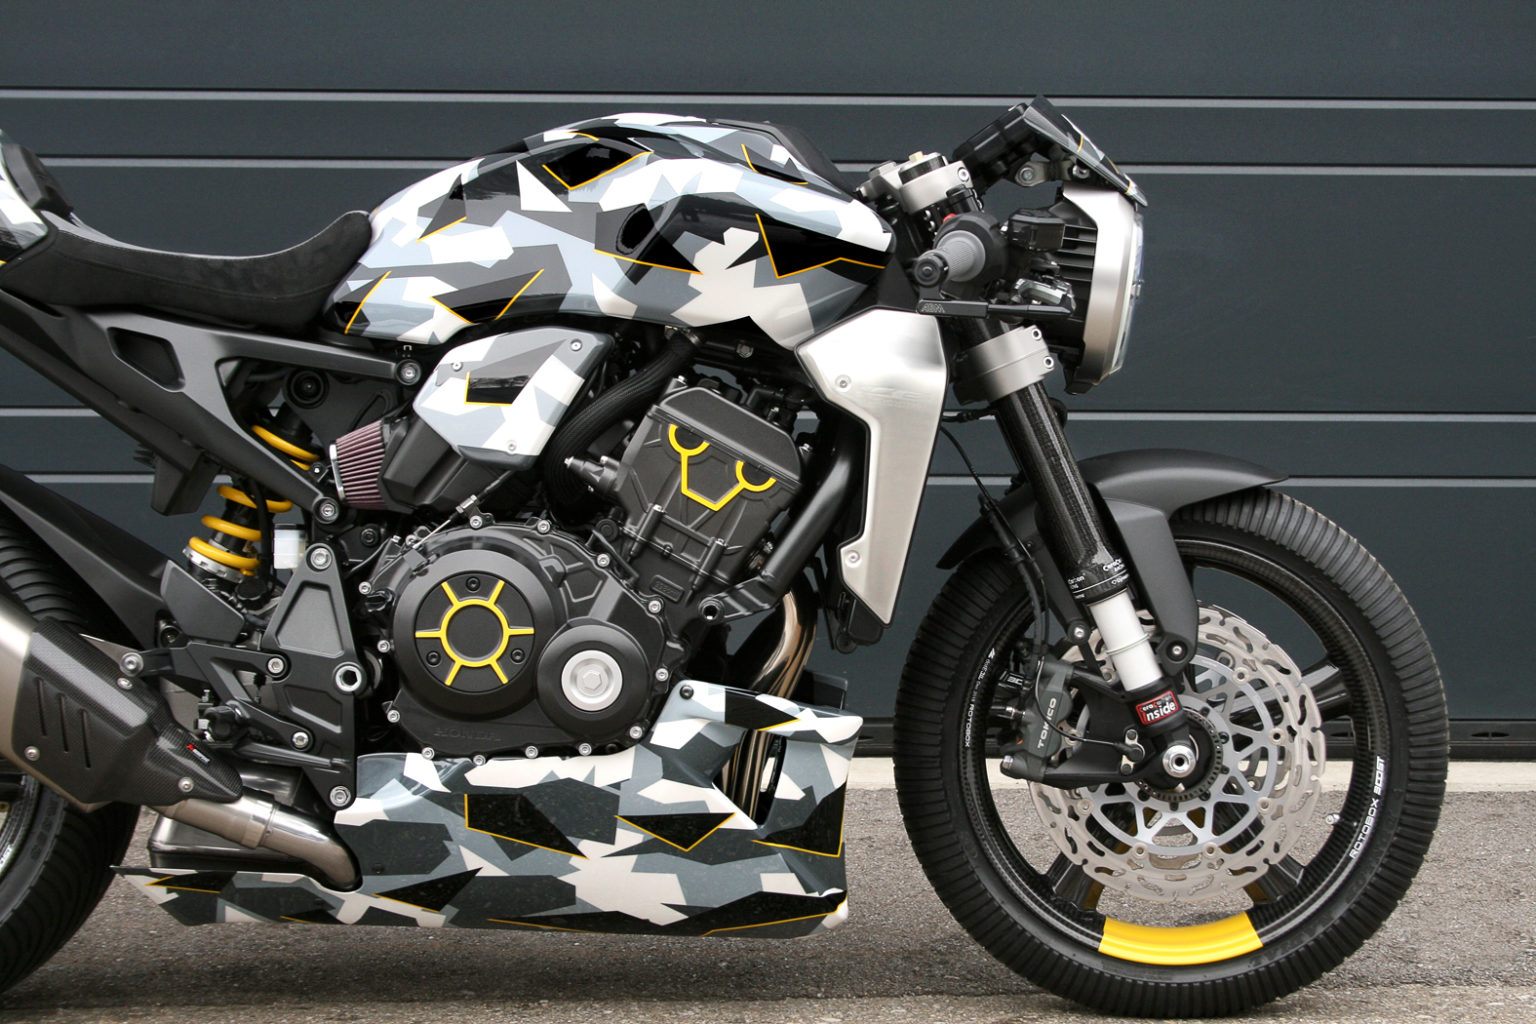 Honda CB1000R-adical by Gannet Design